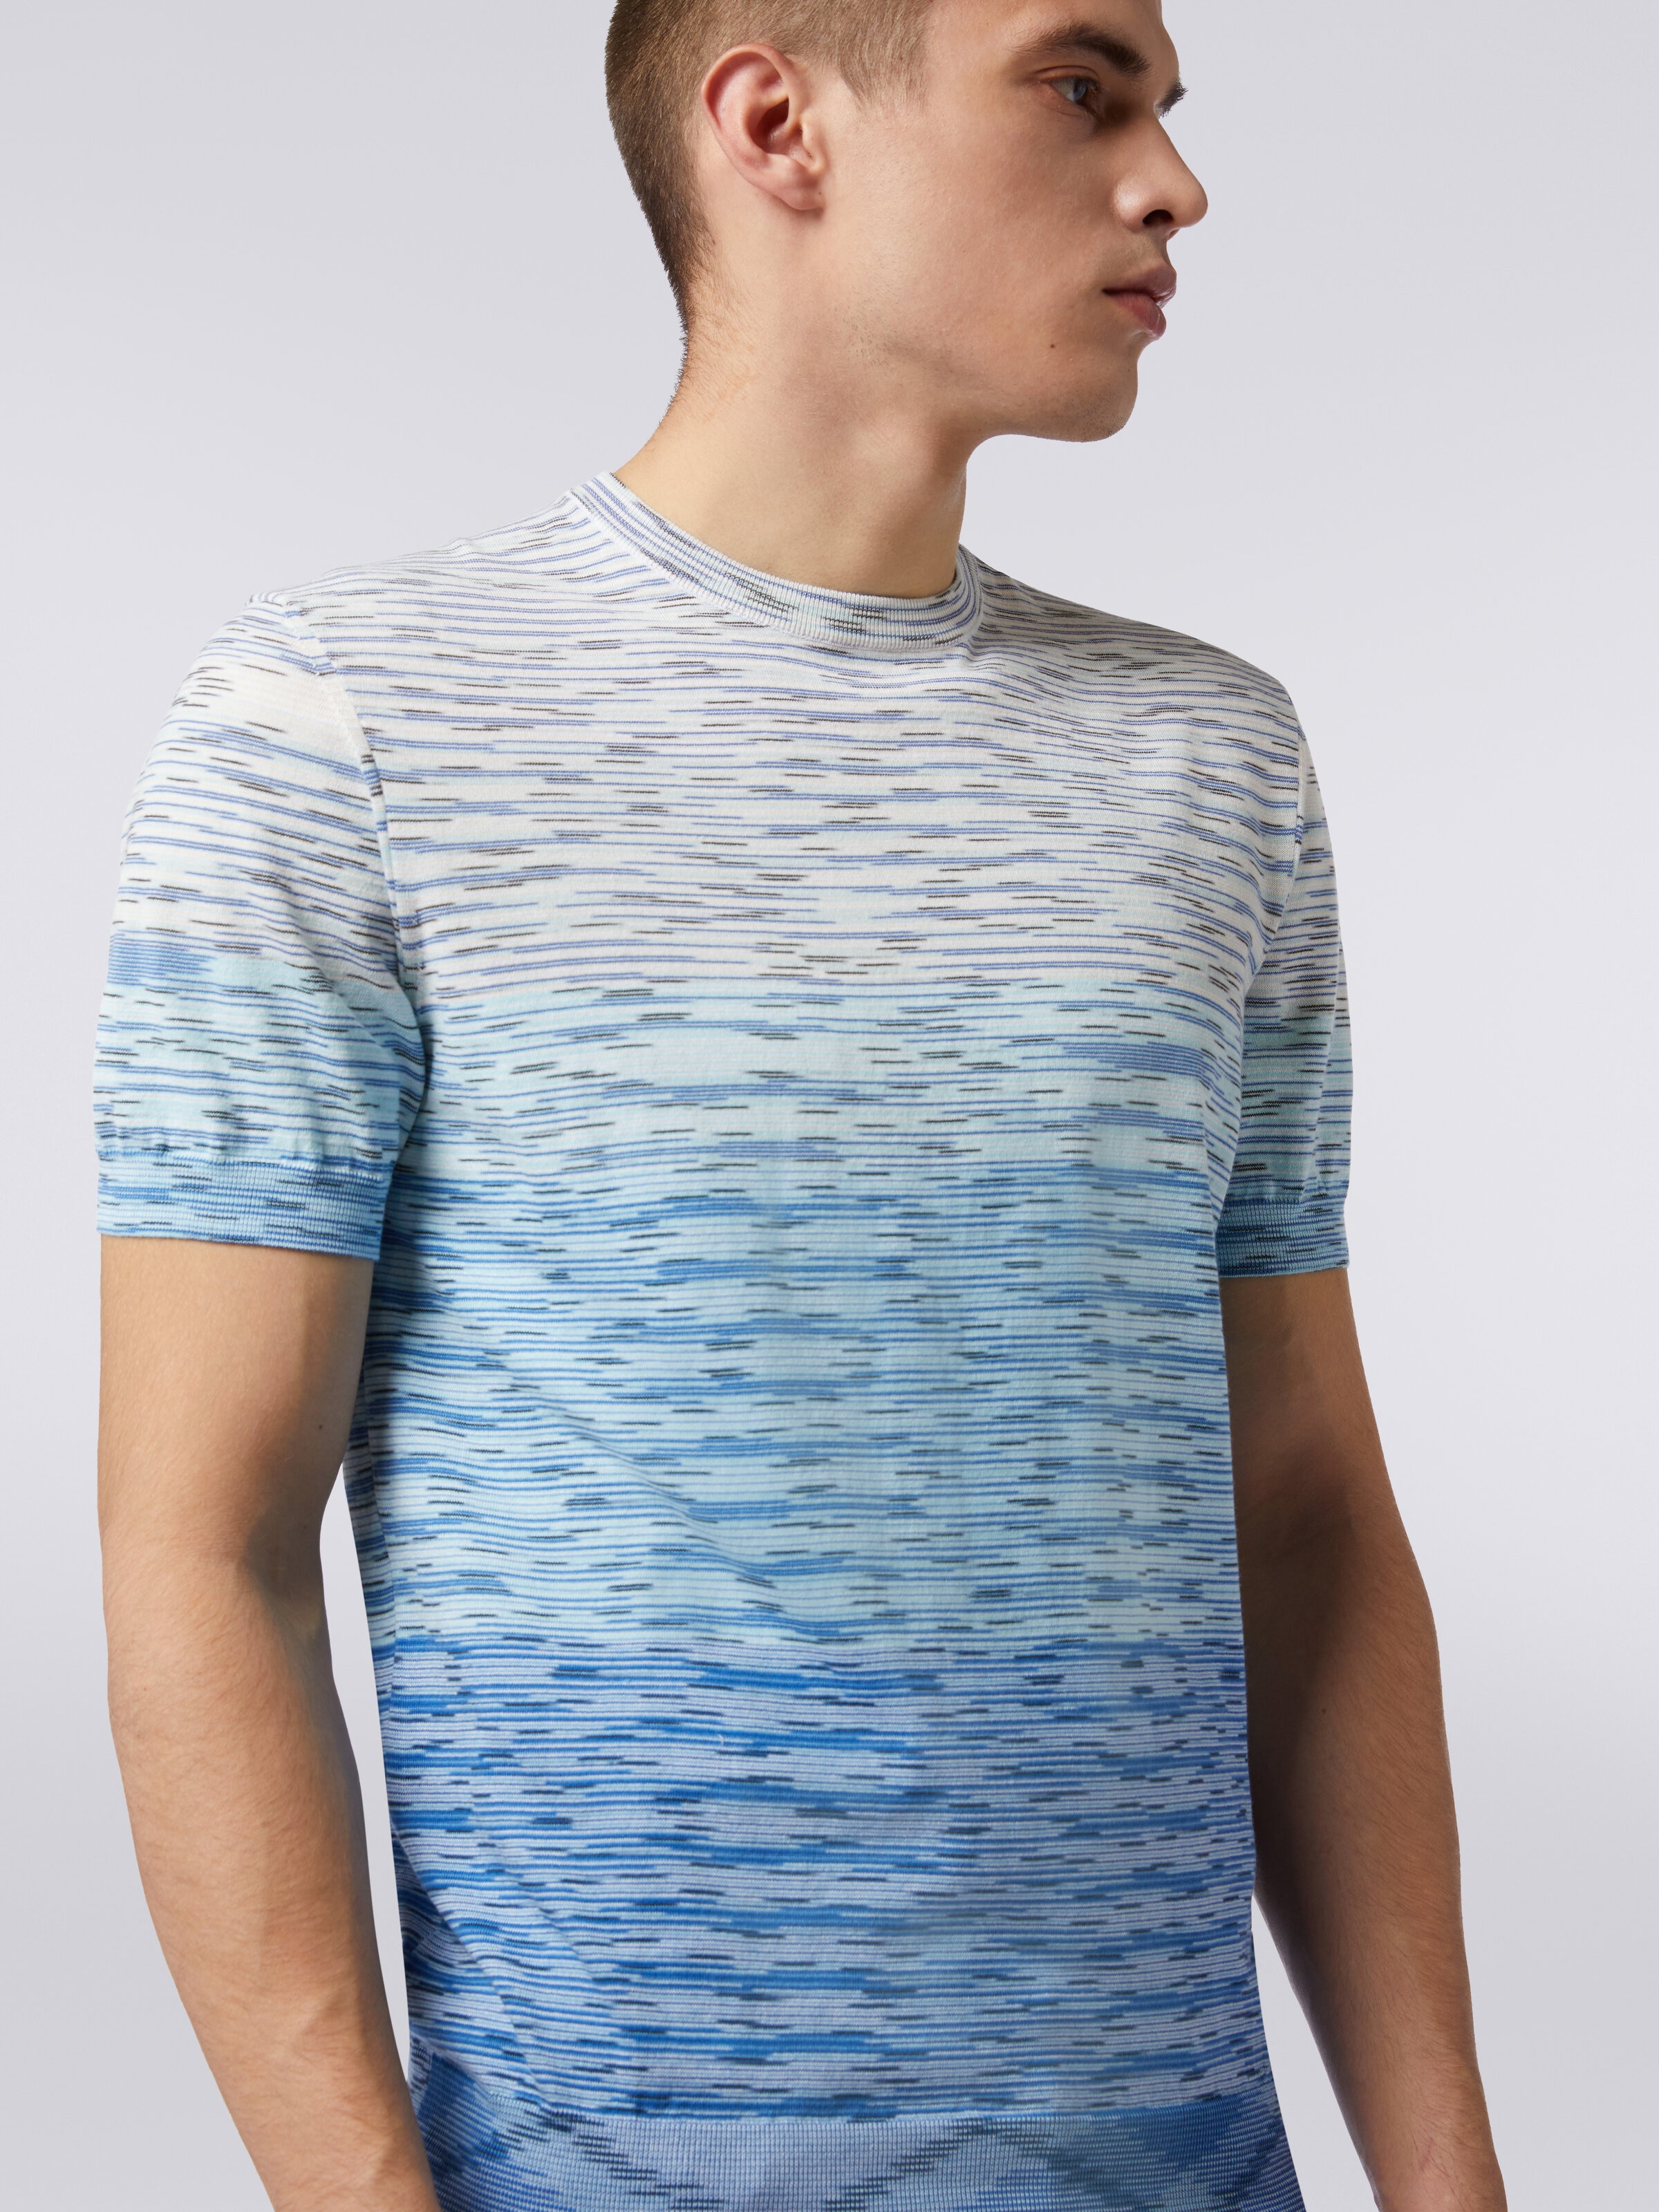 Crew-neck T-shirt in dégradé slub cotton, Multicoloured  - 4